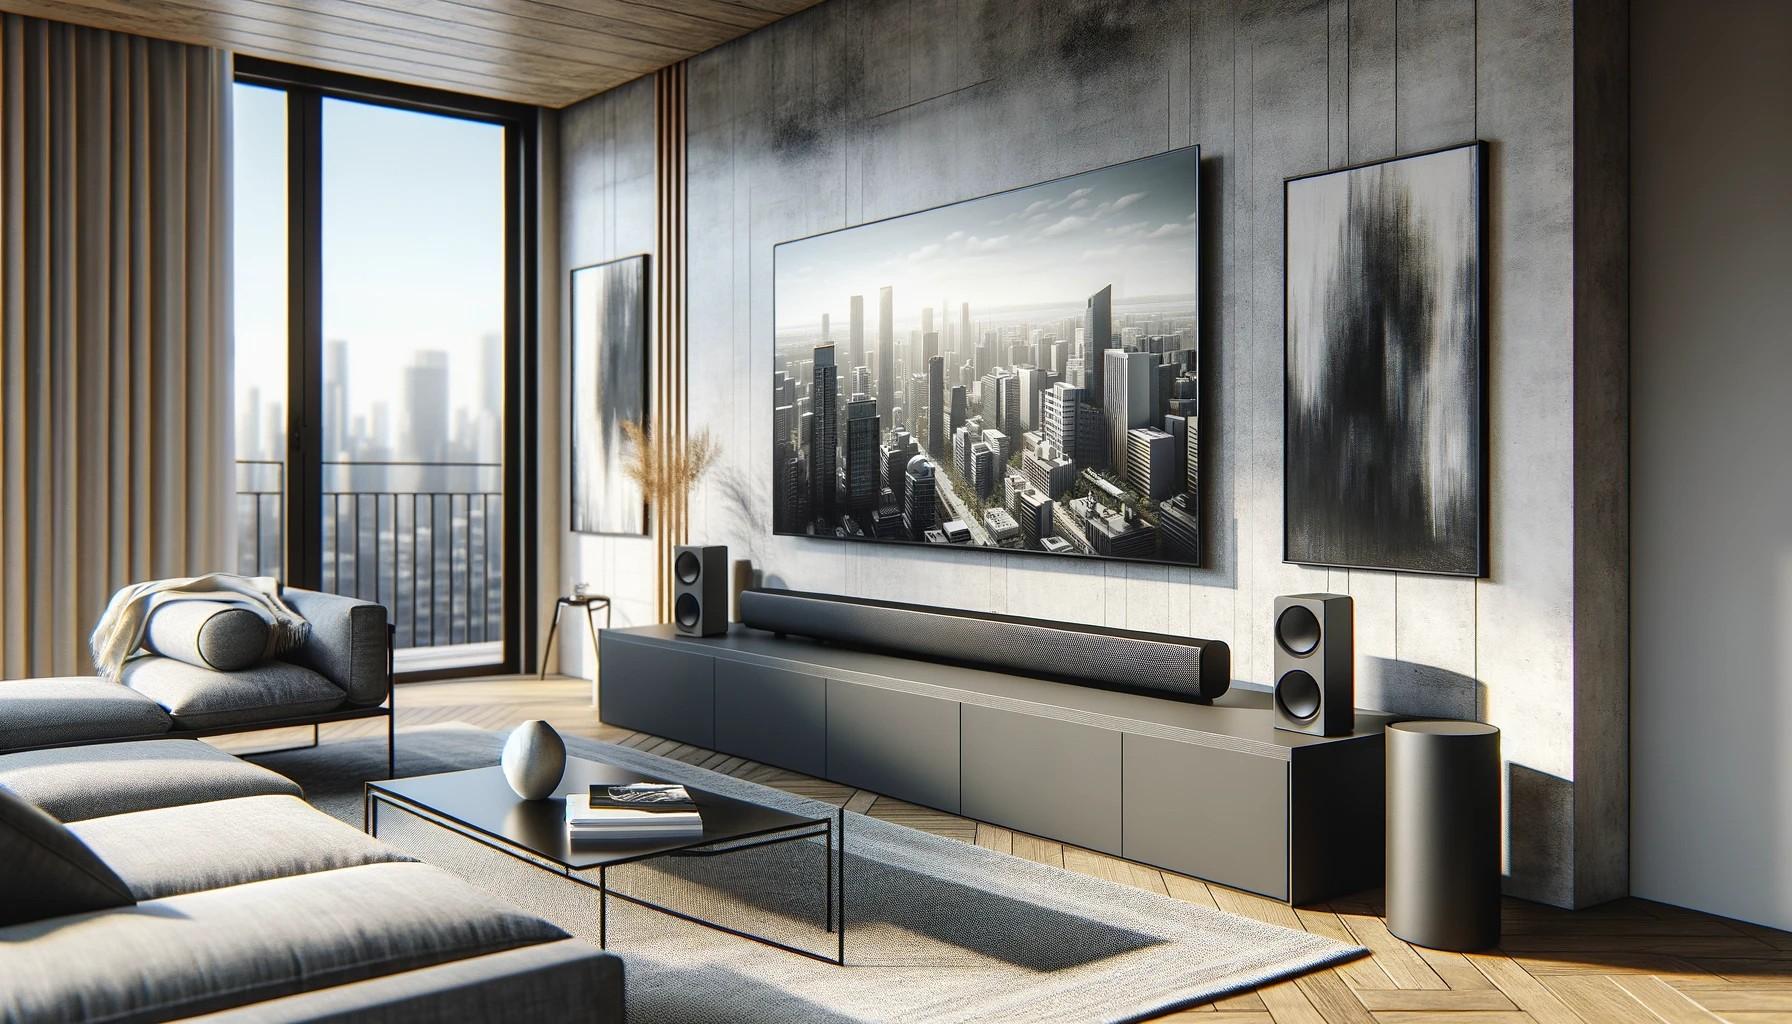 Soundbar in a modern living room